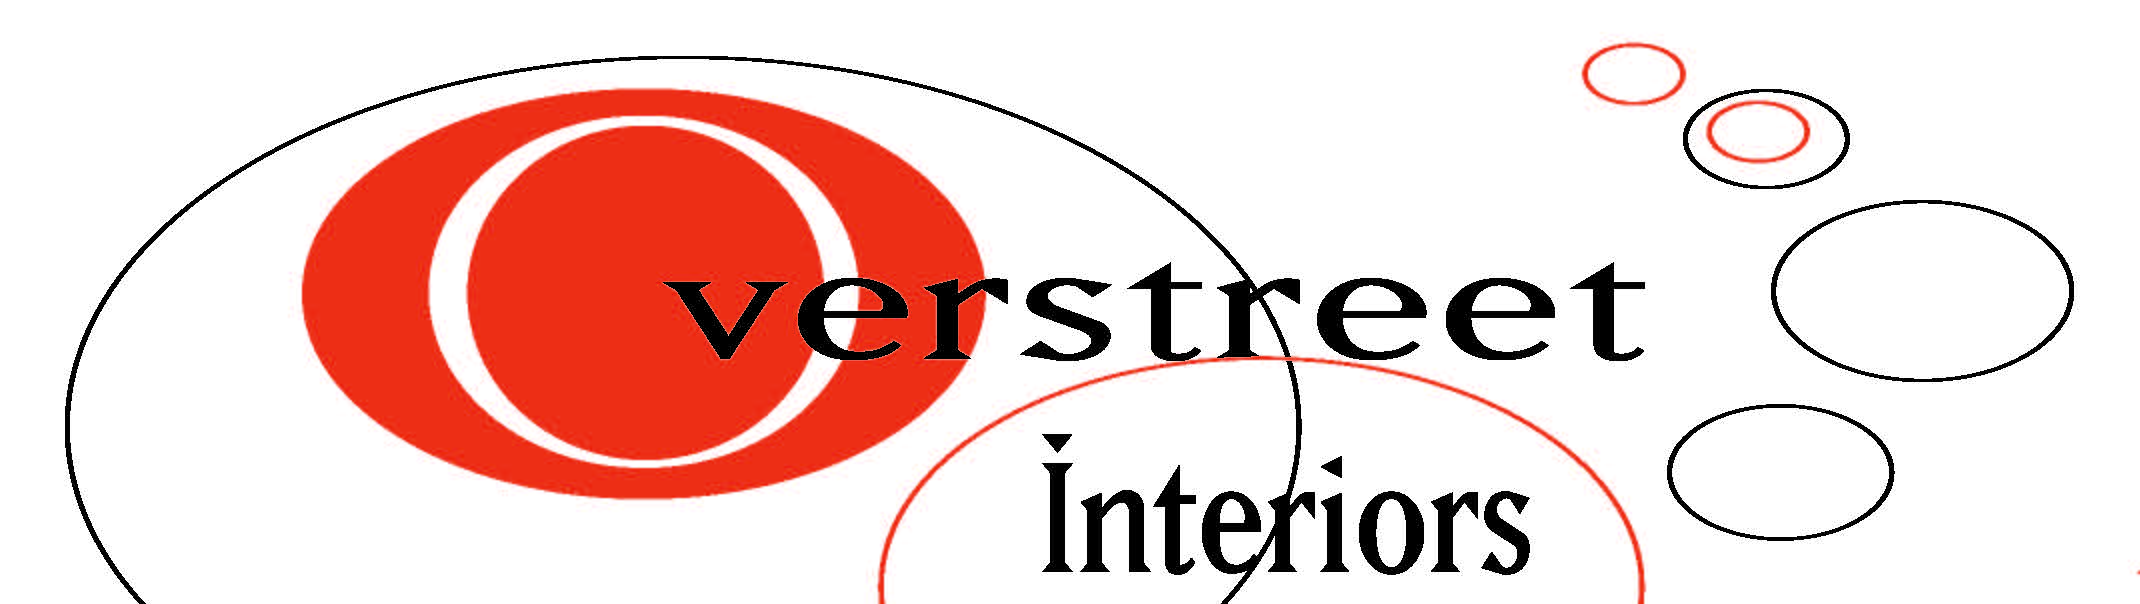 Overstreet Interiors Logo